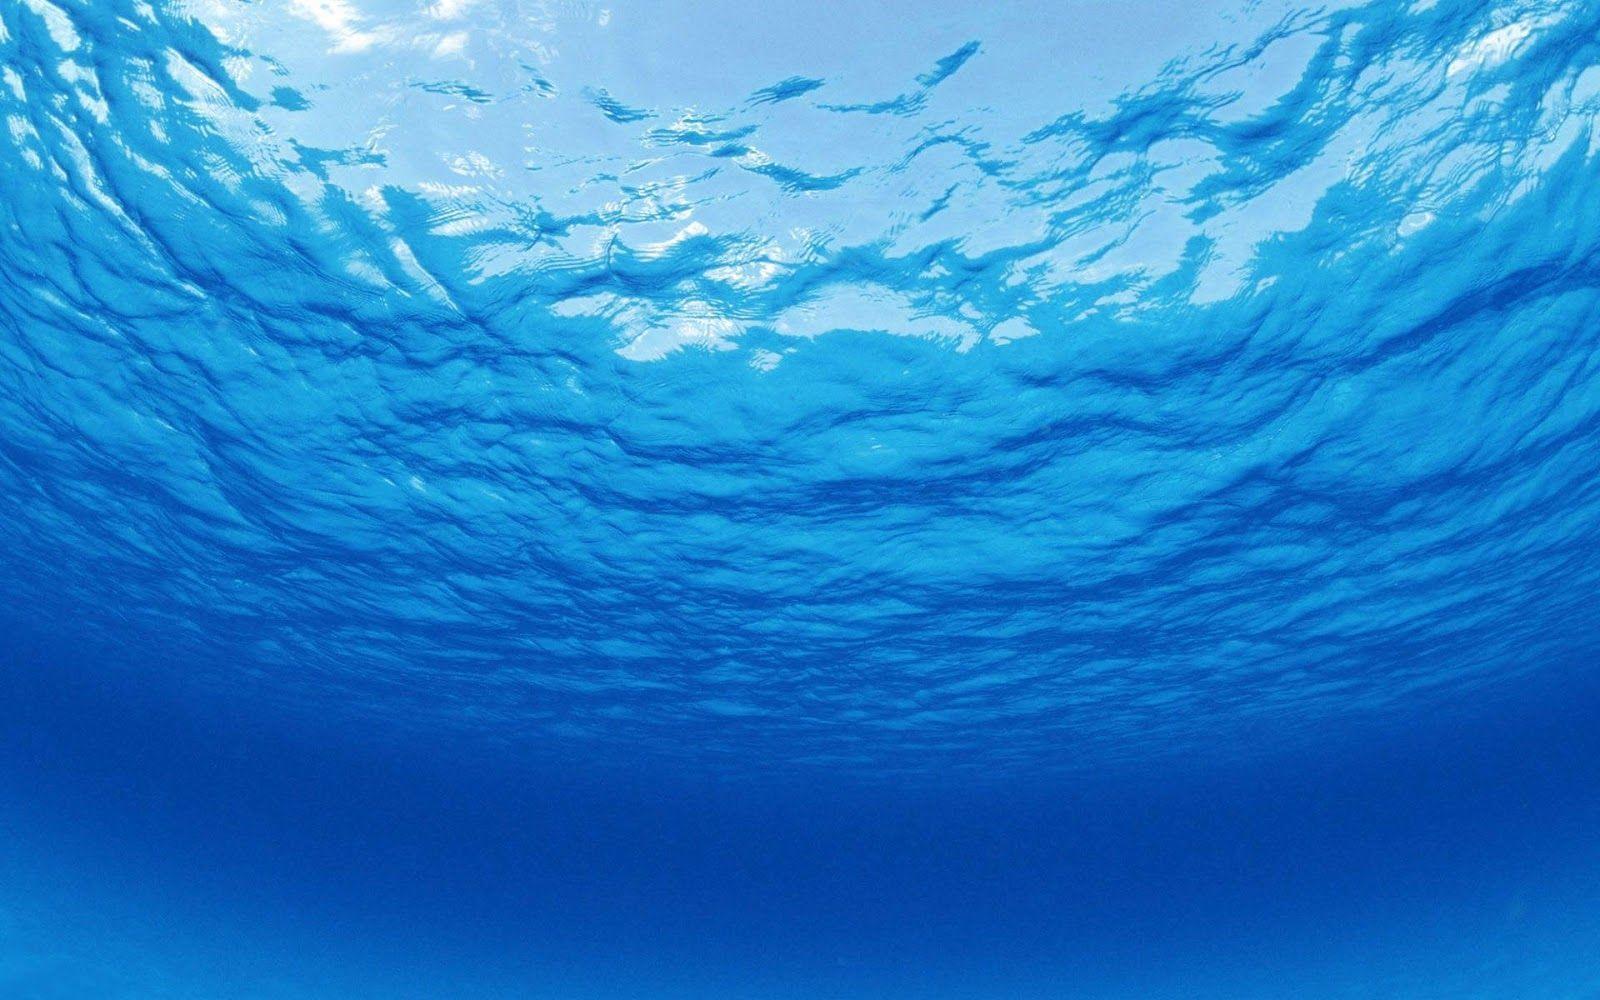 Under Ocean Background. wallpaper, wallpaper hd, background desktop. Blue water wallpaper, Beautiful nature wallpaper hd, Ocean wallpaper